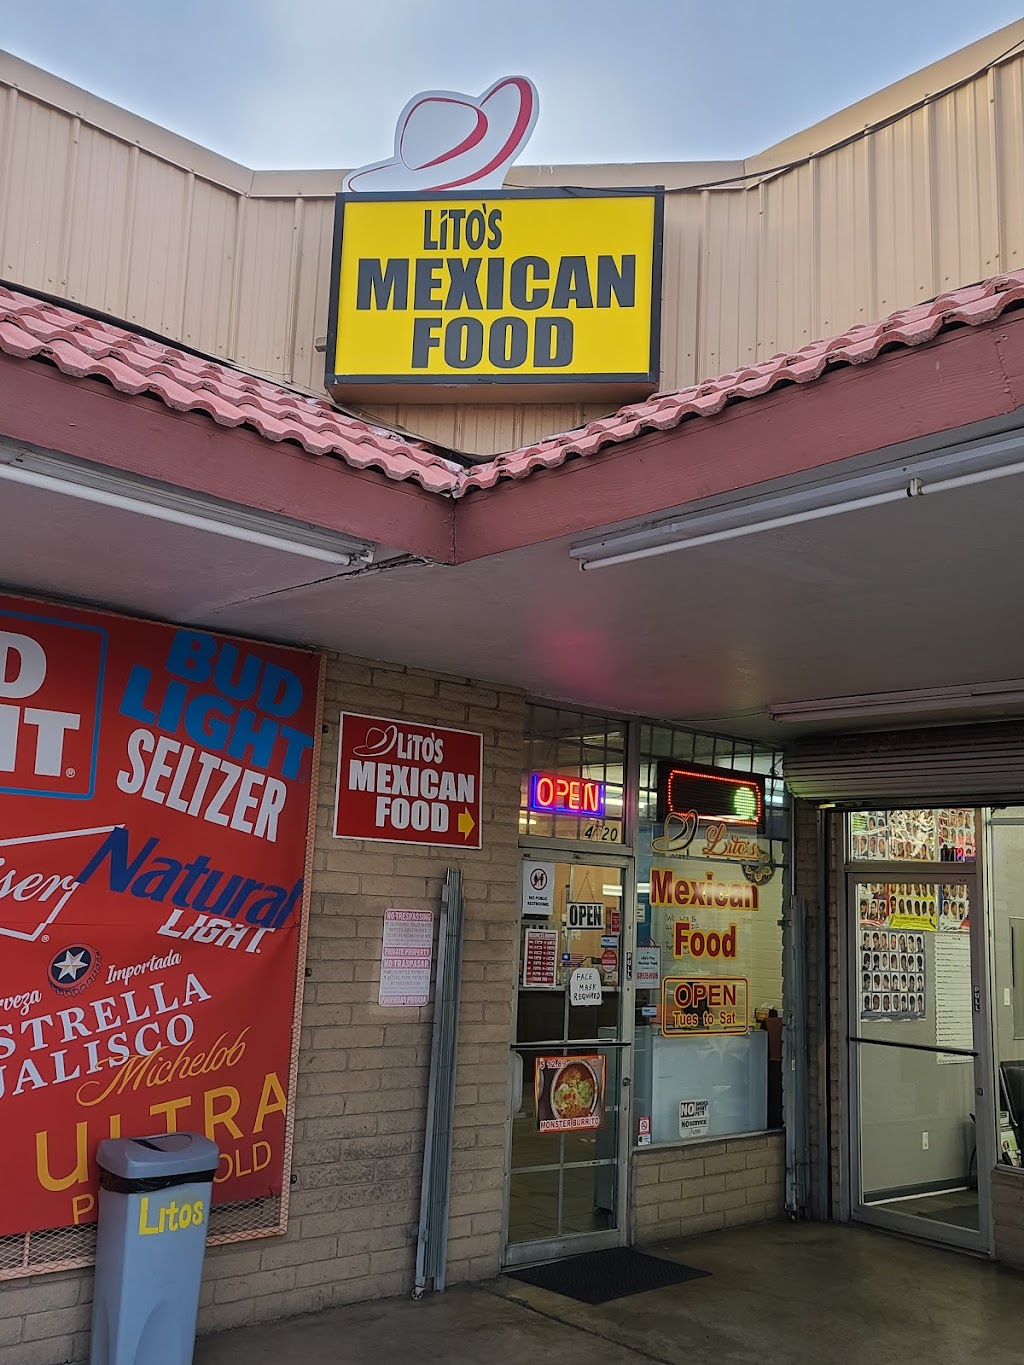 Litos Fine Mexican Food | 4720 W Olive Ave, Glendale, AZ 85302, USA | Phone: (623) 930-0458